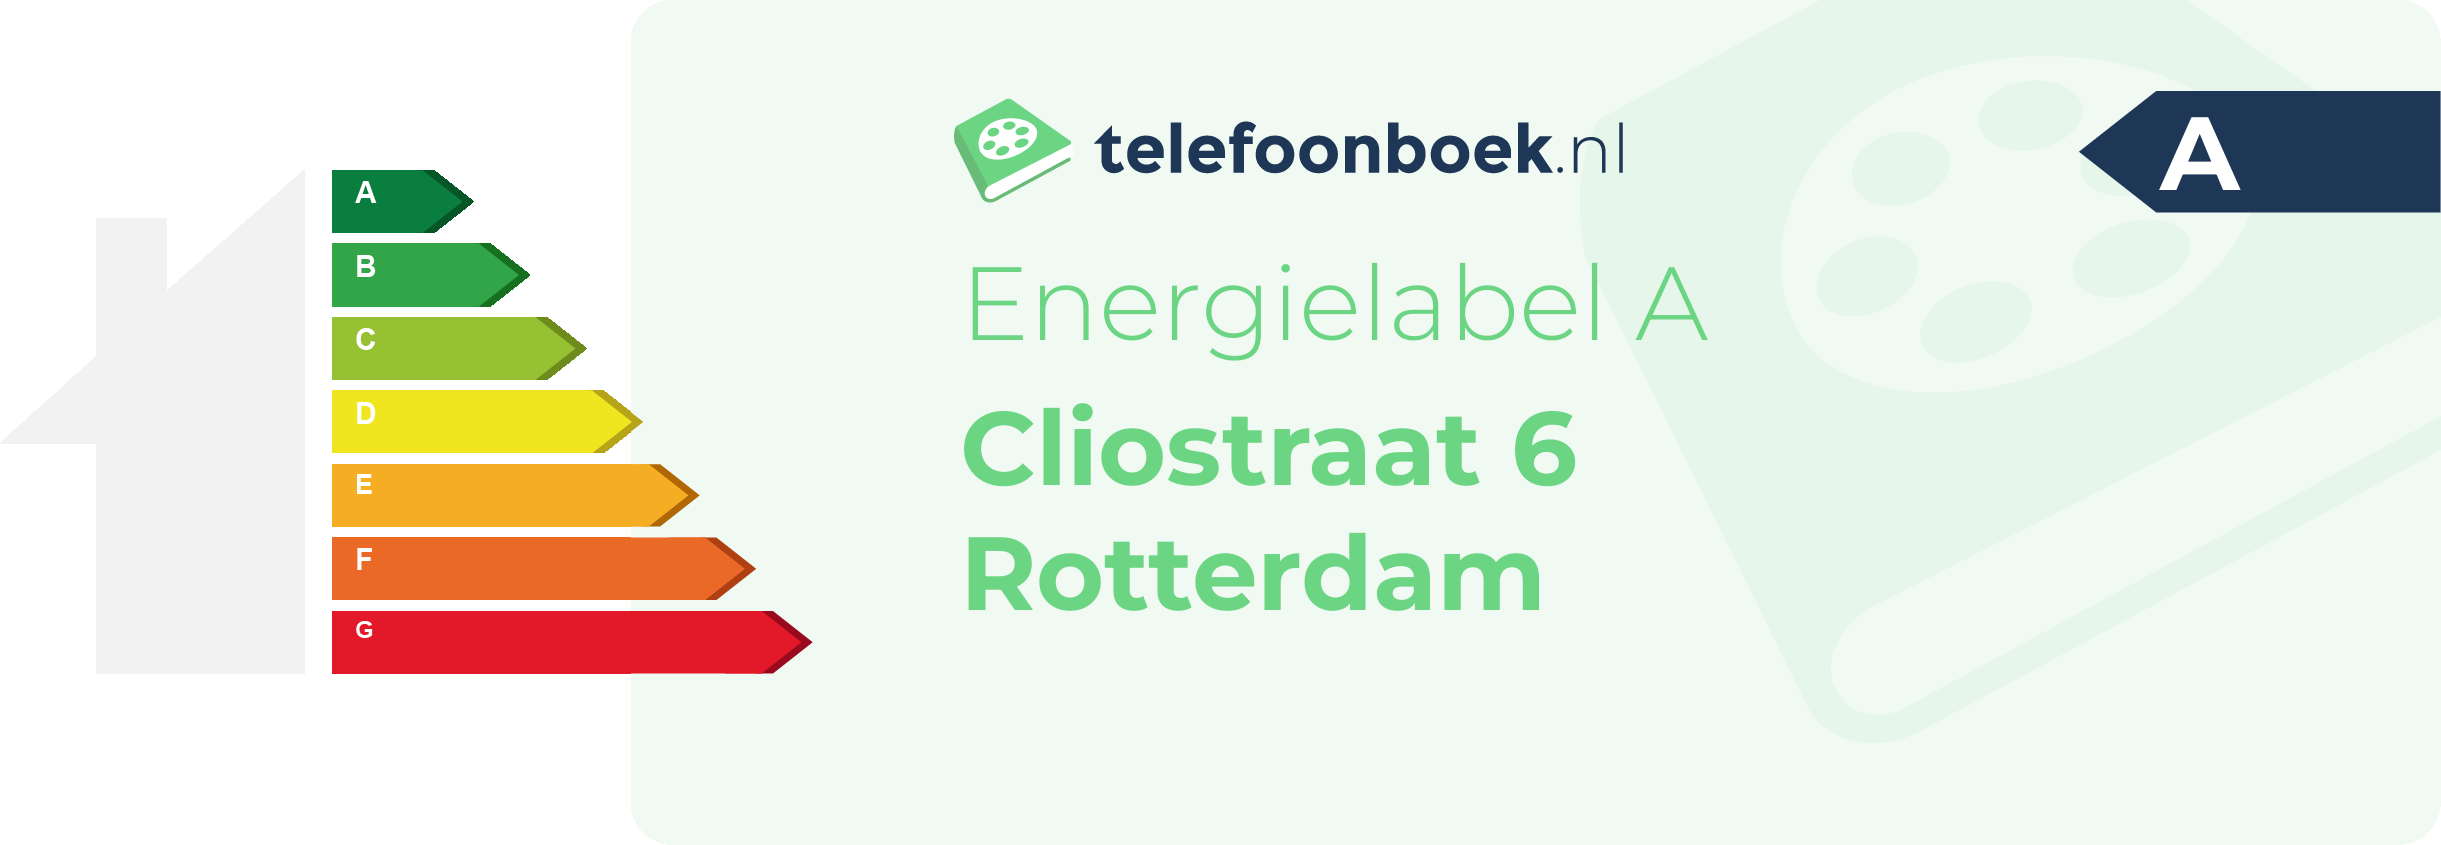 Energielabel Cliostraat 6 Rotterdam